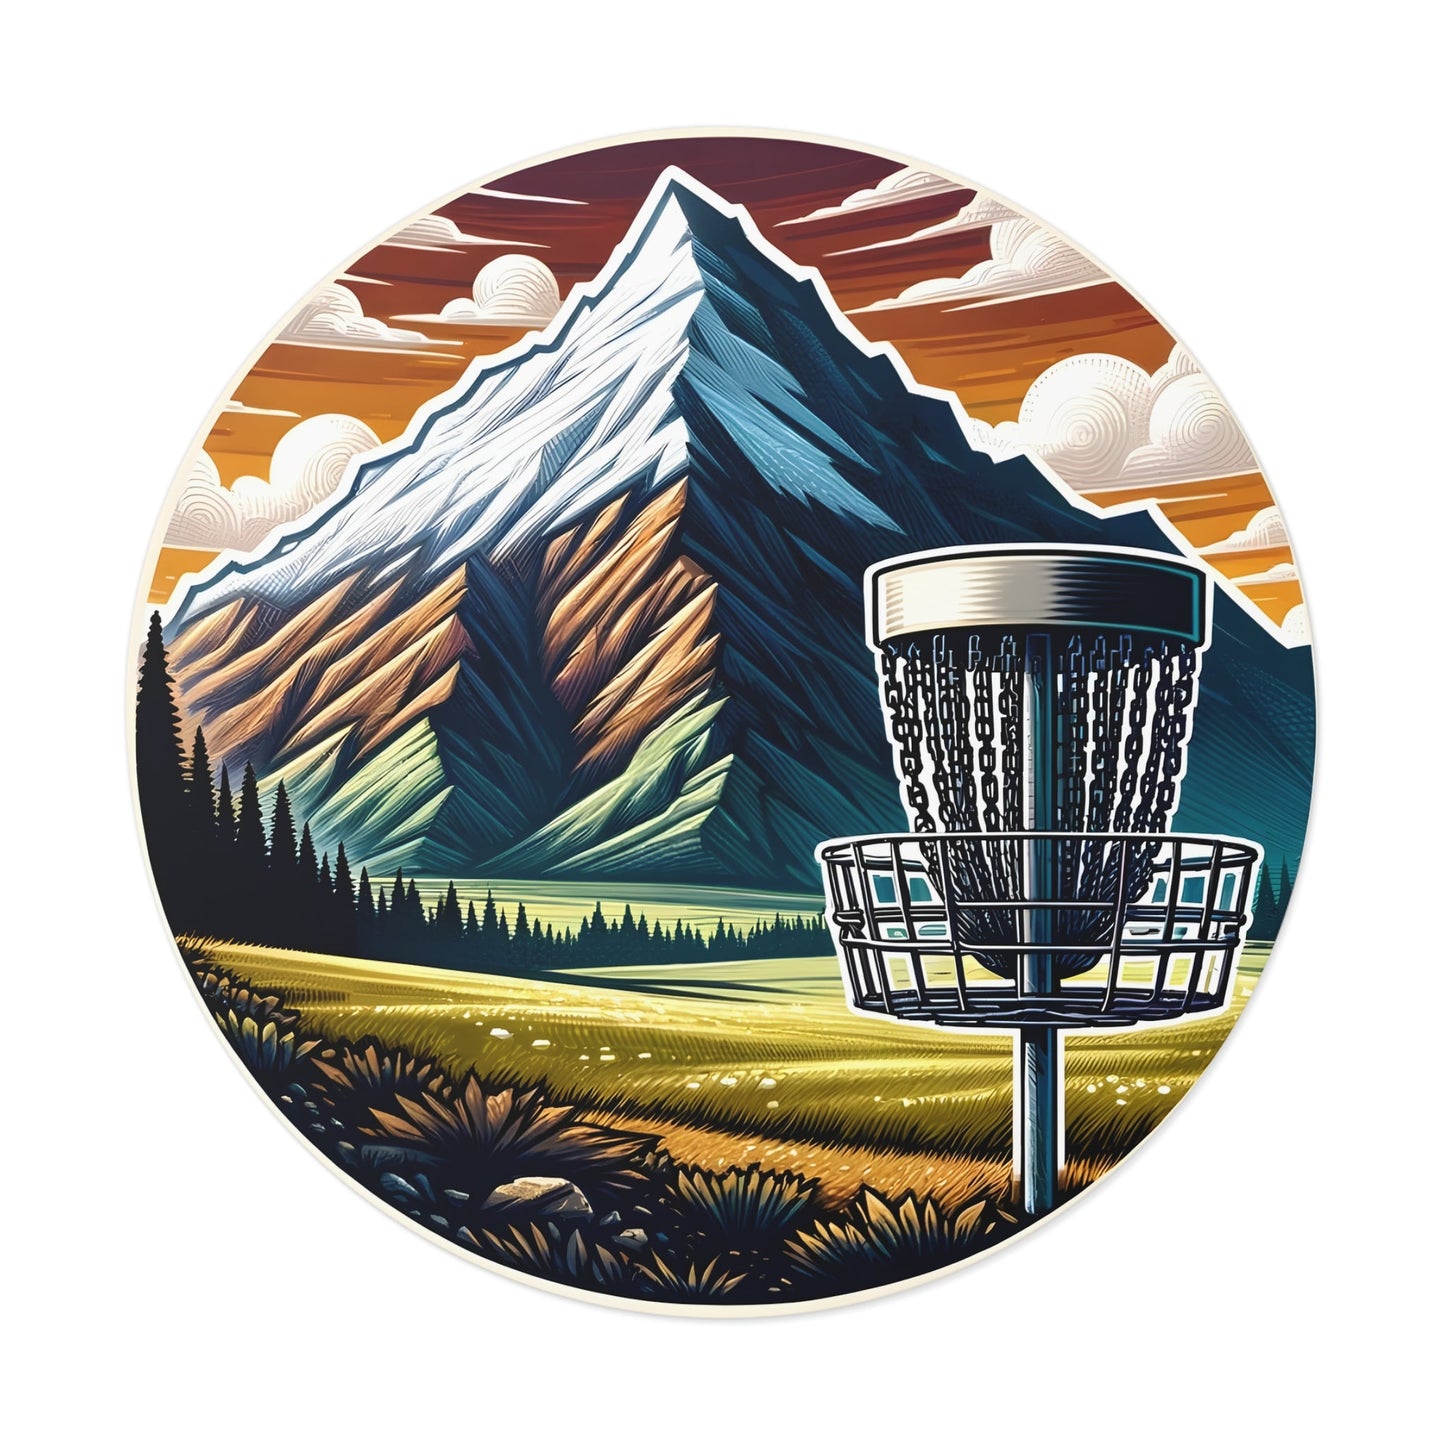 Disc Golf Basket by Mountain Sticker v1 Round Vinyl Stickers - Quirky Goodies